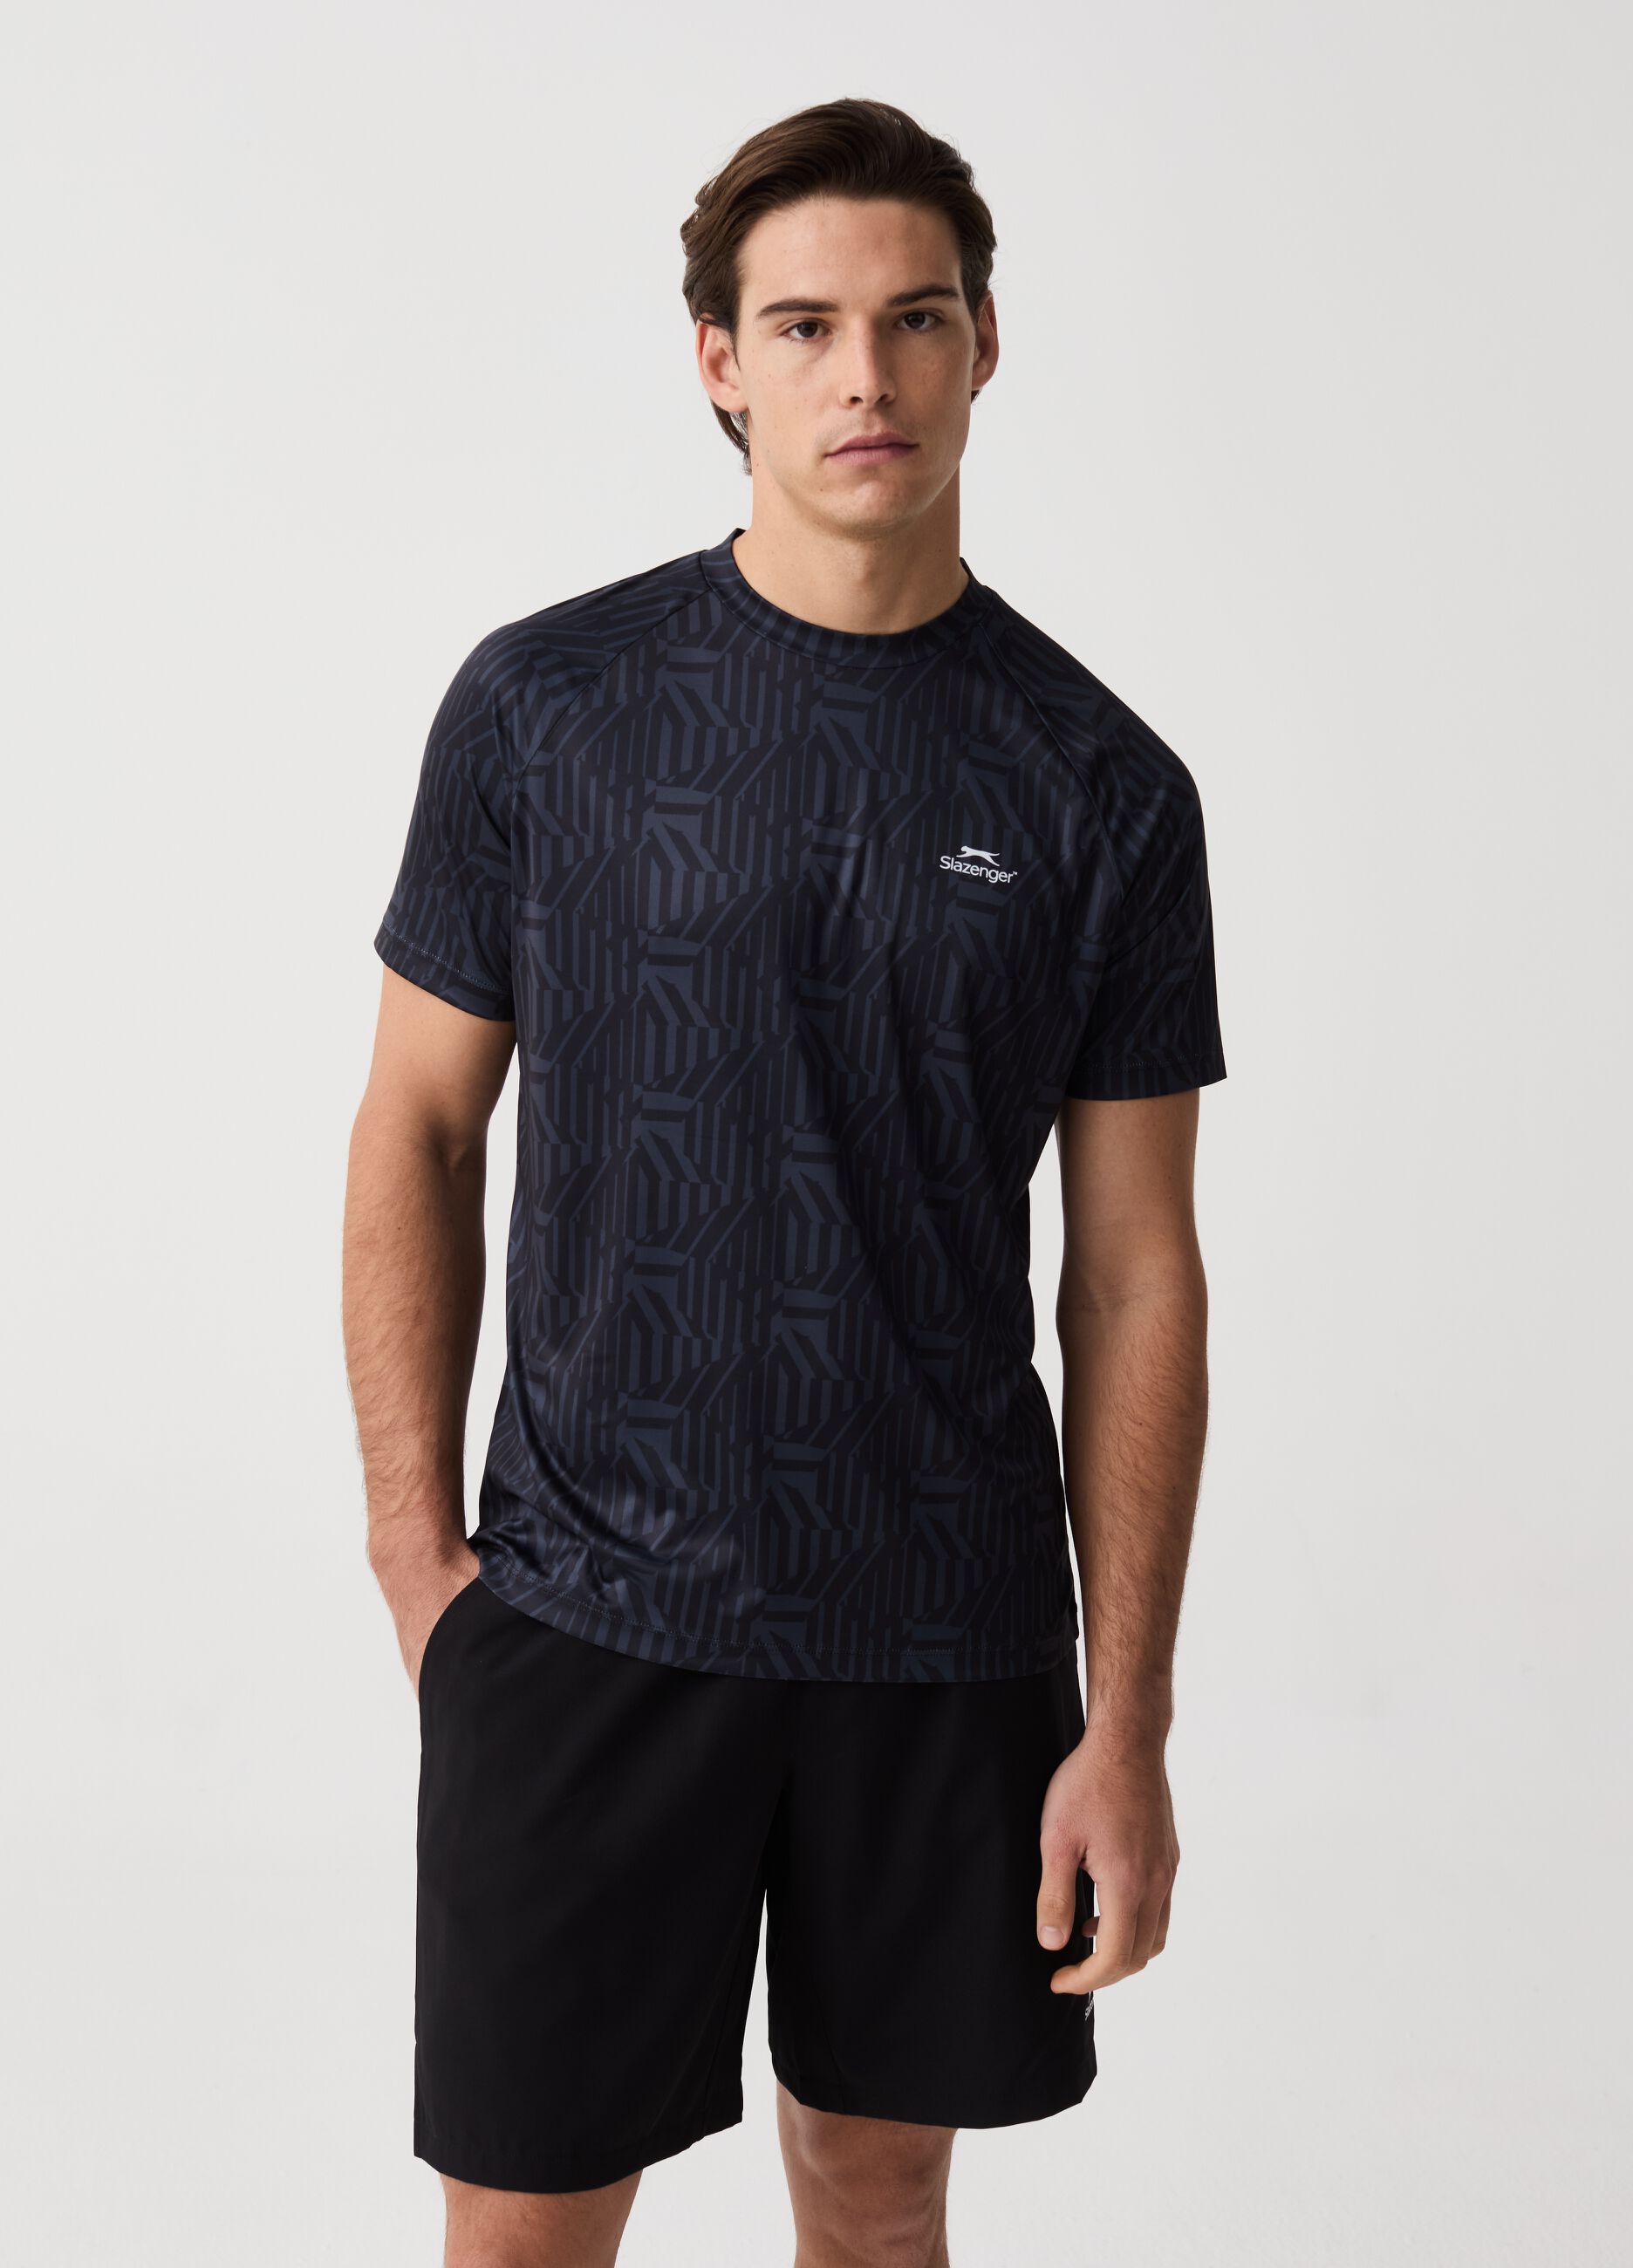 Slazenger tennis T-shirt with pattern